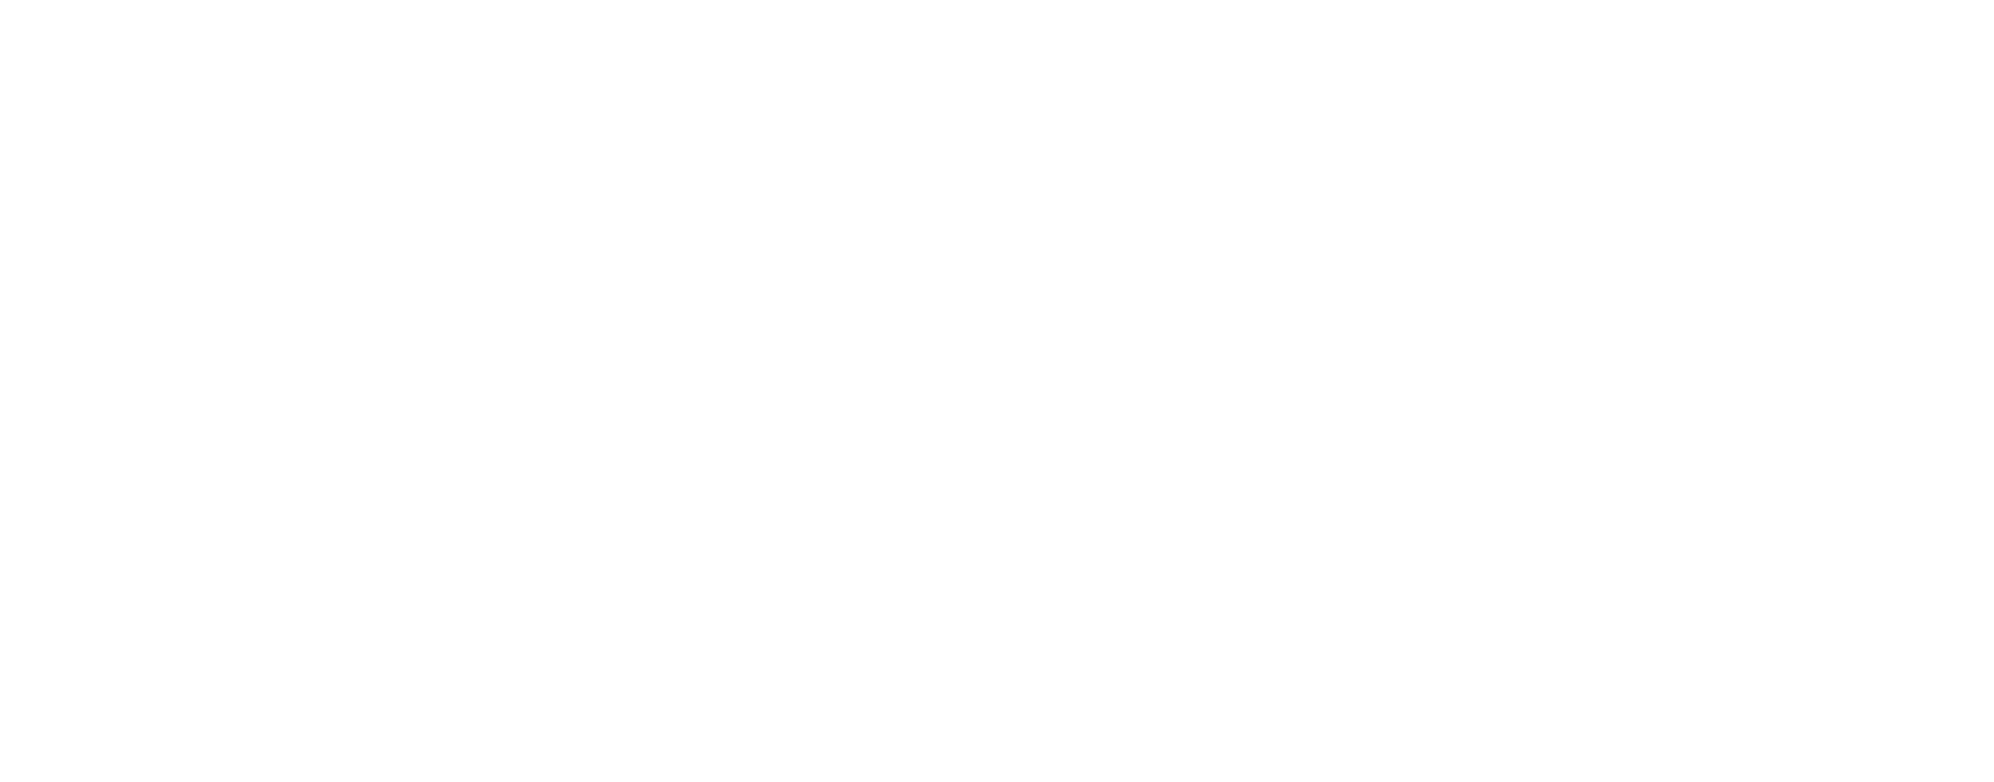 OpenFF Toolkit 0.10.6+4.g97462b88.dirty documentation logo